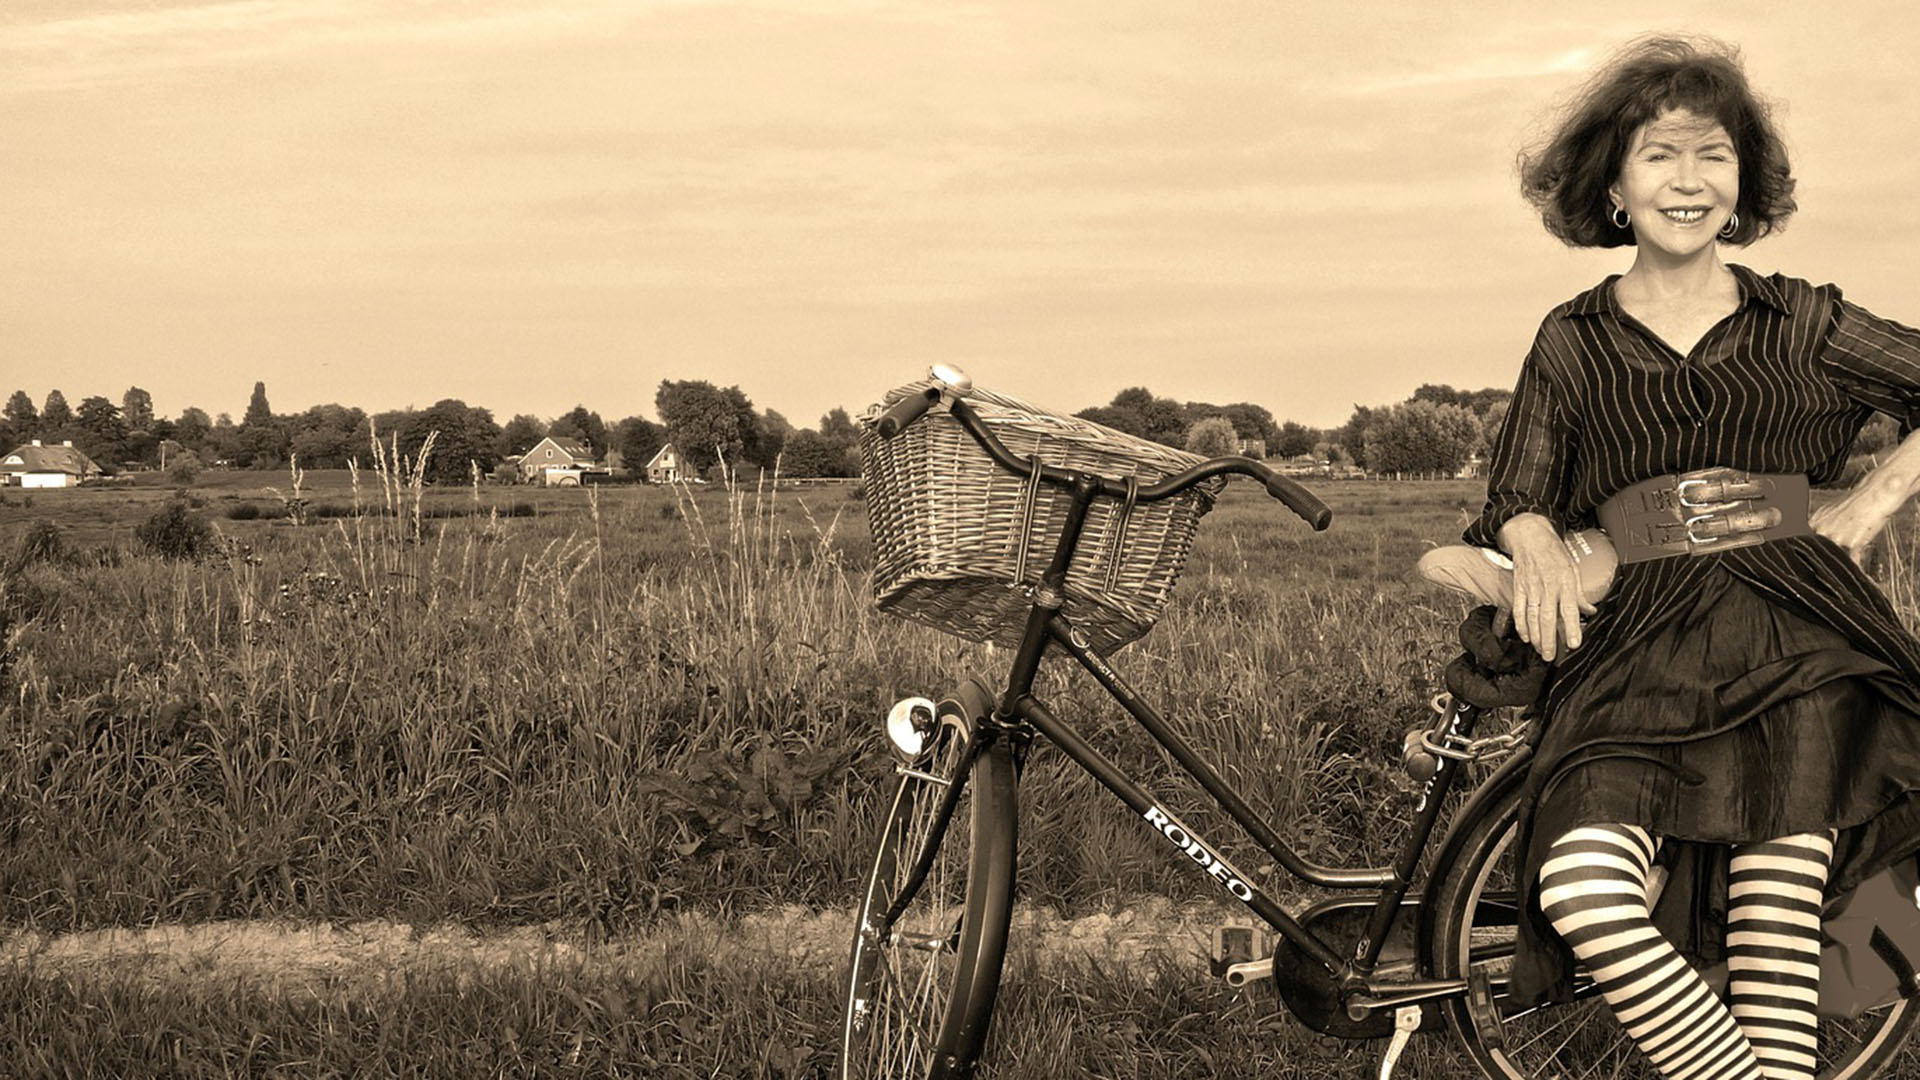 An einem Feldrand lehnt sich eine Frau an ein abgestelltes Fahrrad.